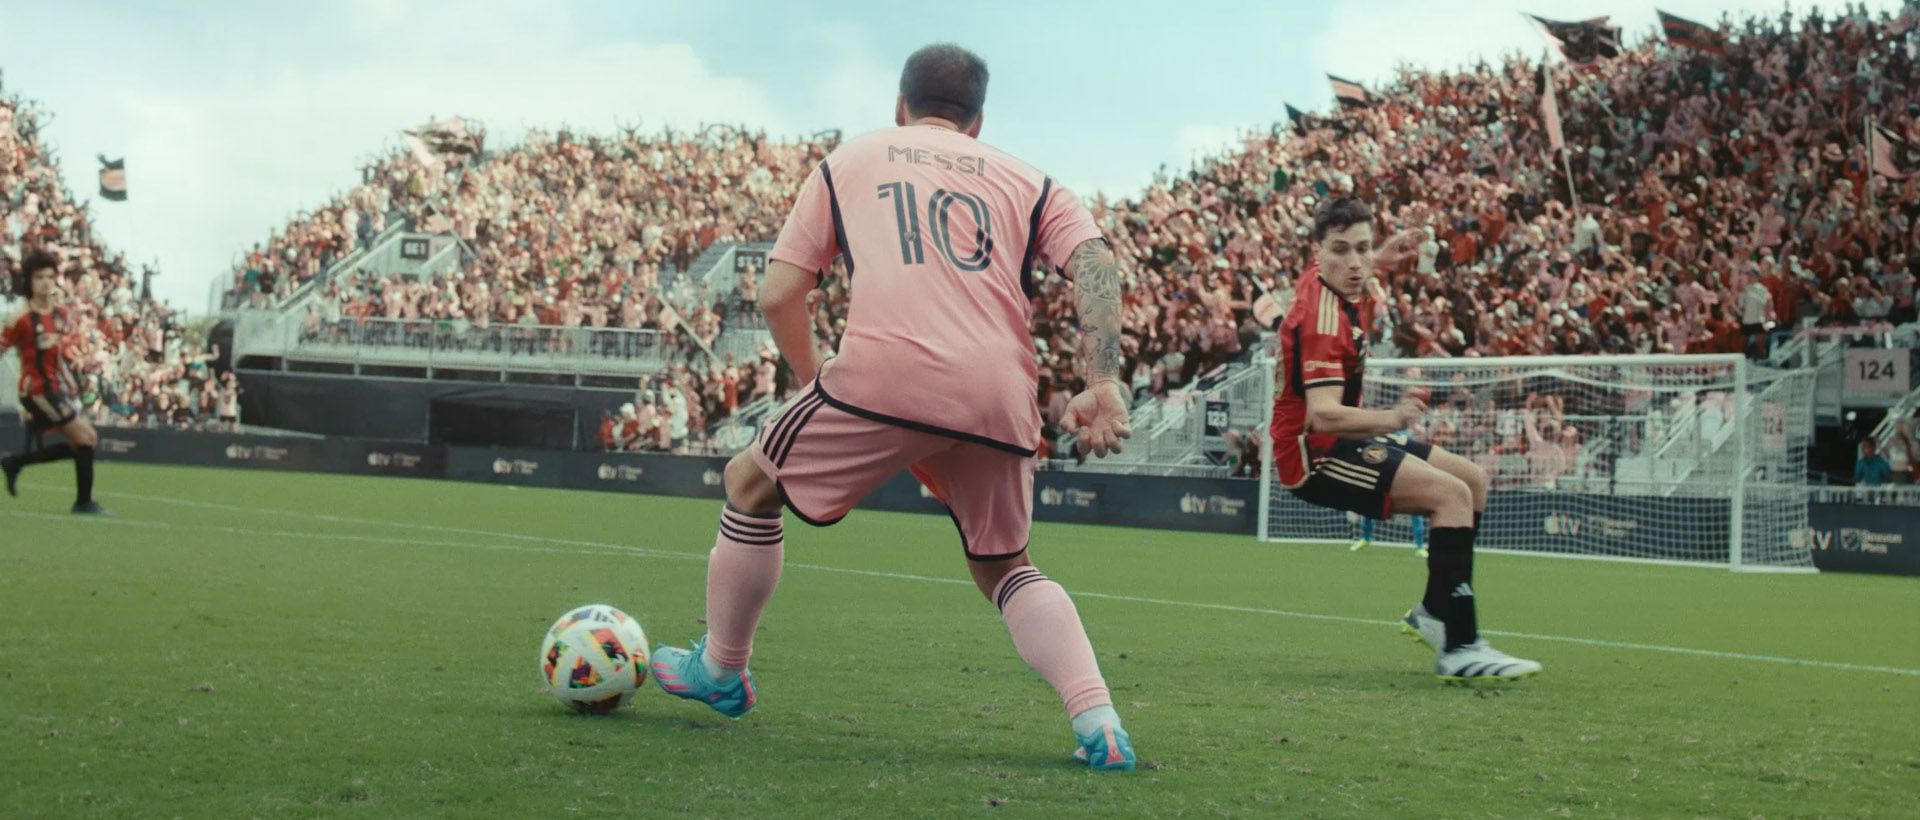 Messi kicking a soccer ball